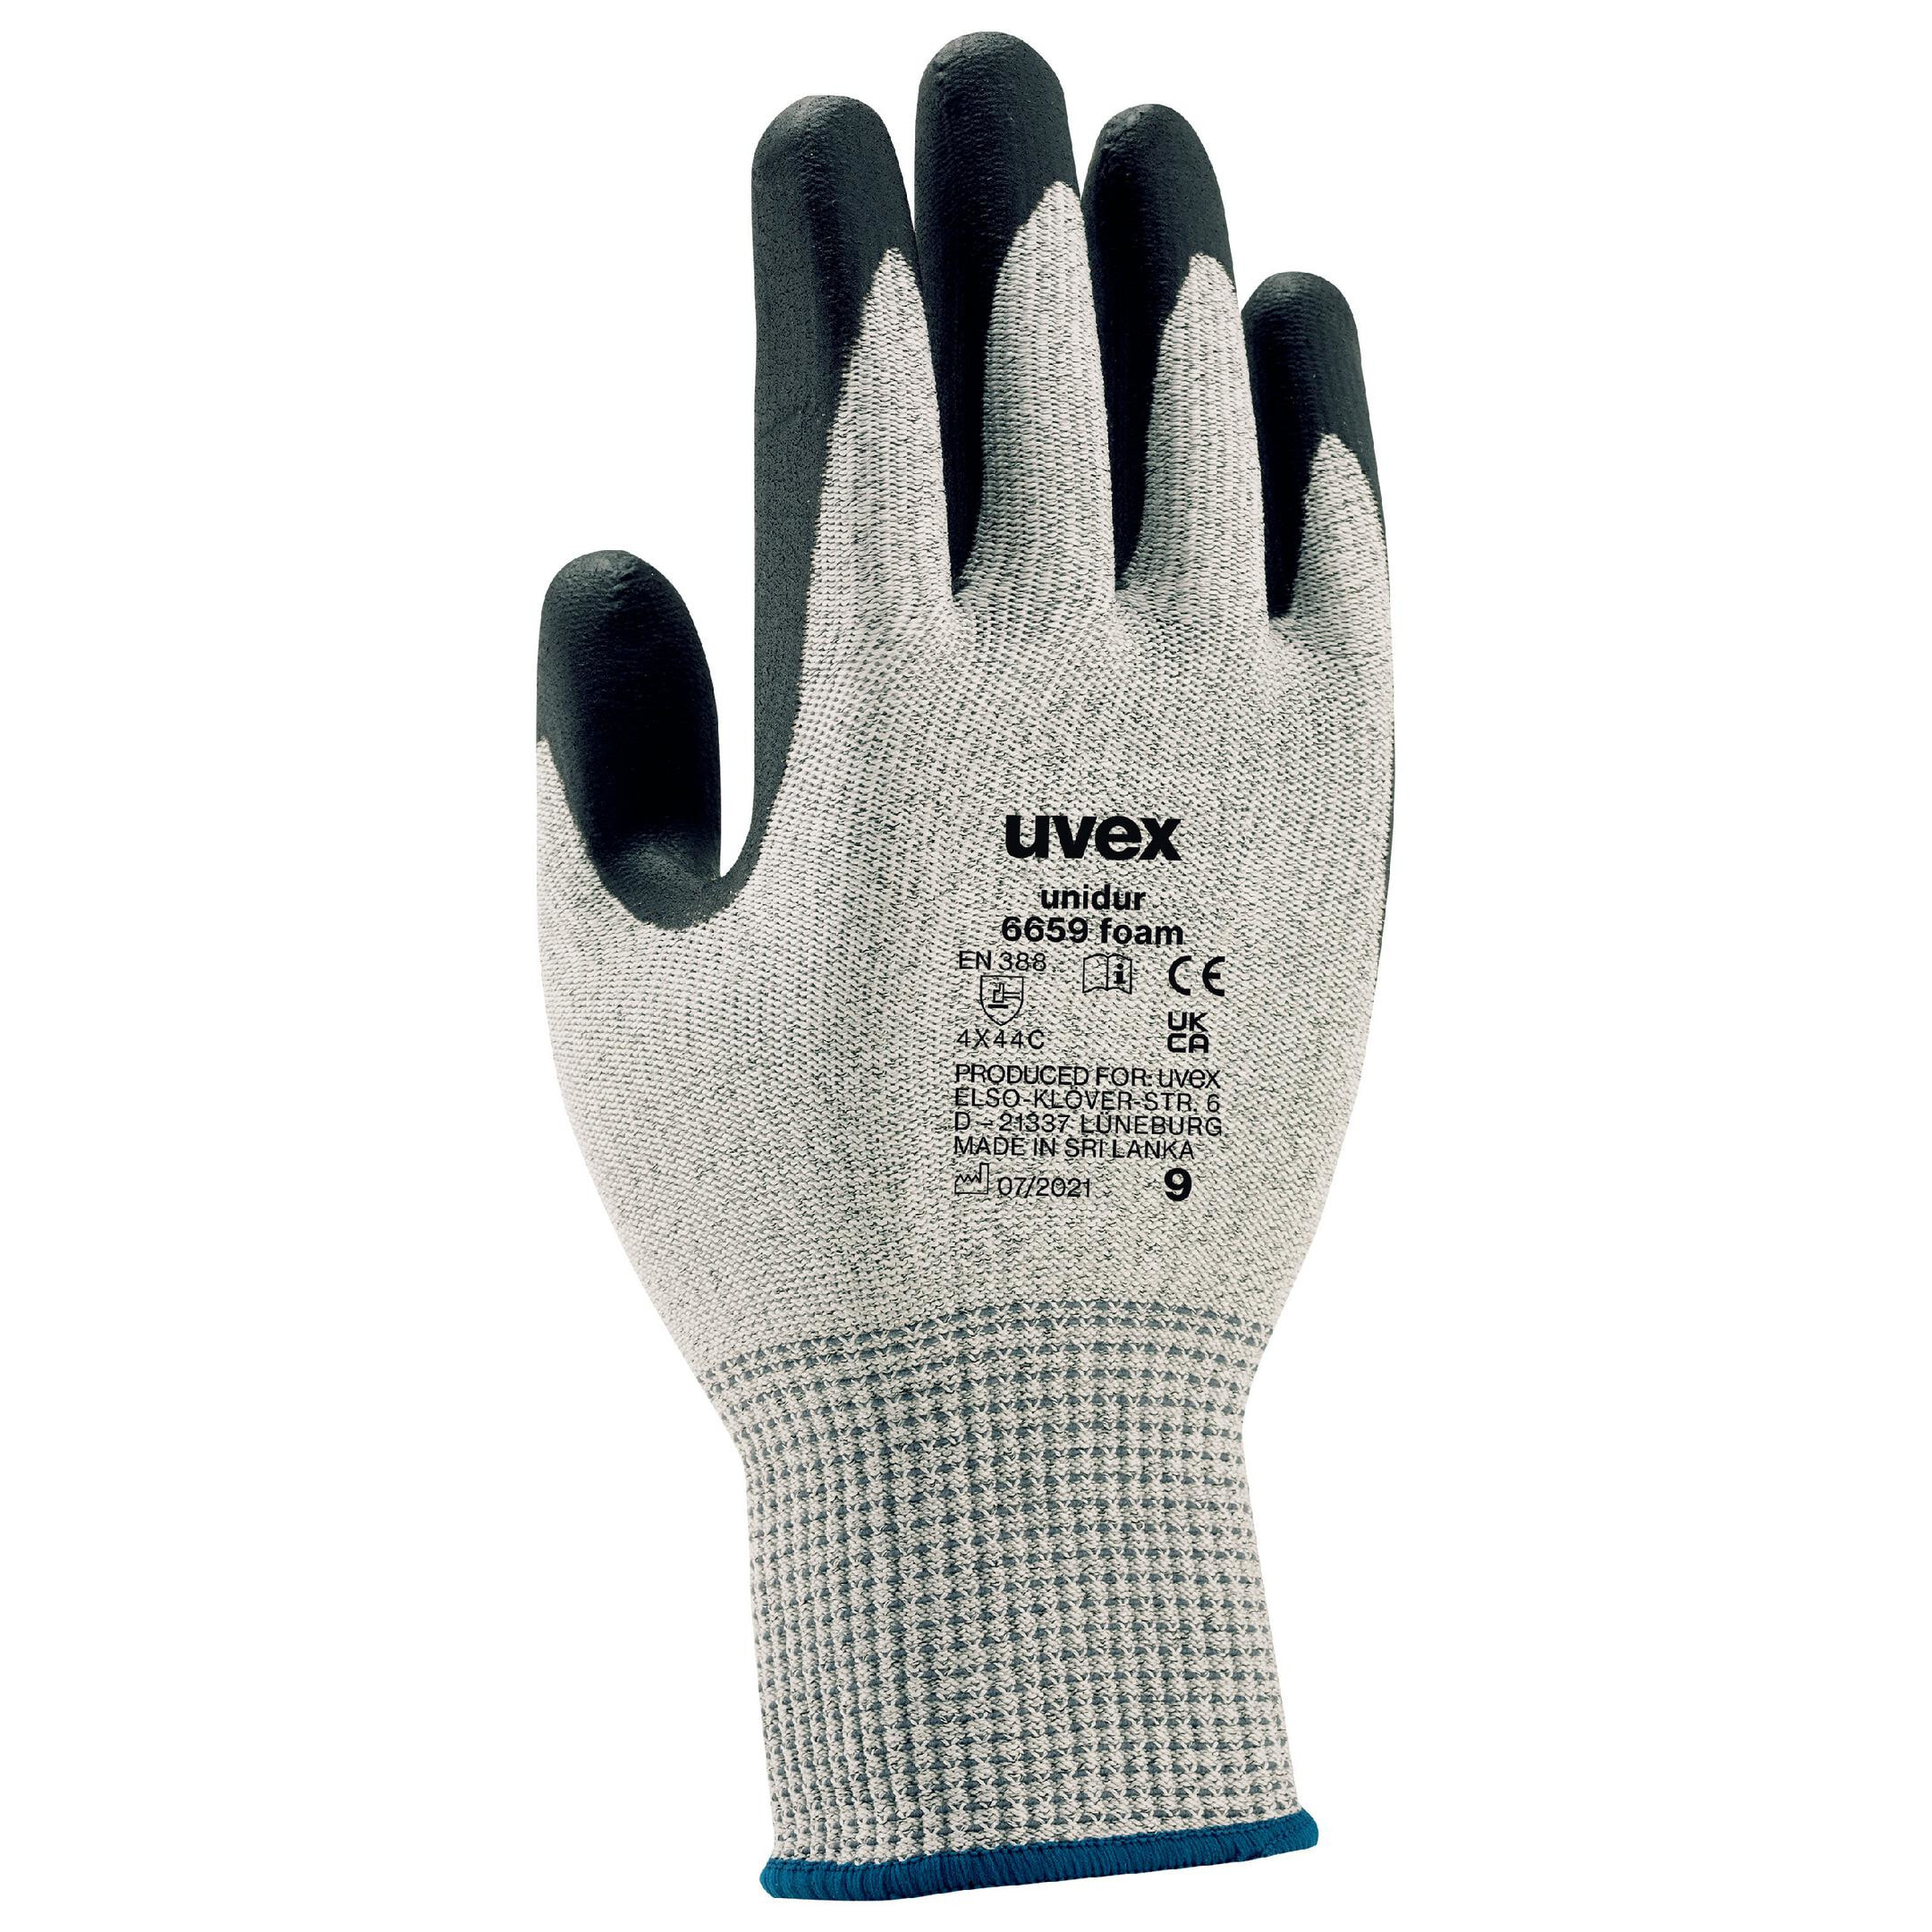 UVEX Arbeitsschutz unidur 6659 foam - Black - Grey - EUE - Adult - Adult - Male - Polyethylene - Fiber - Polyamide